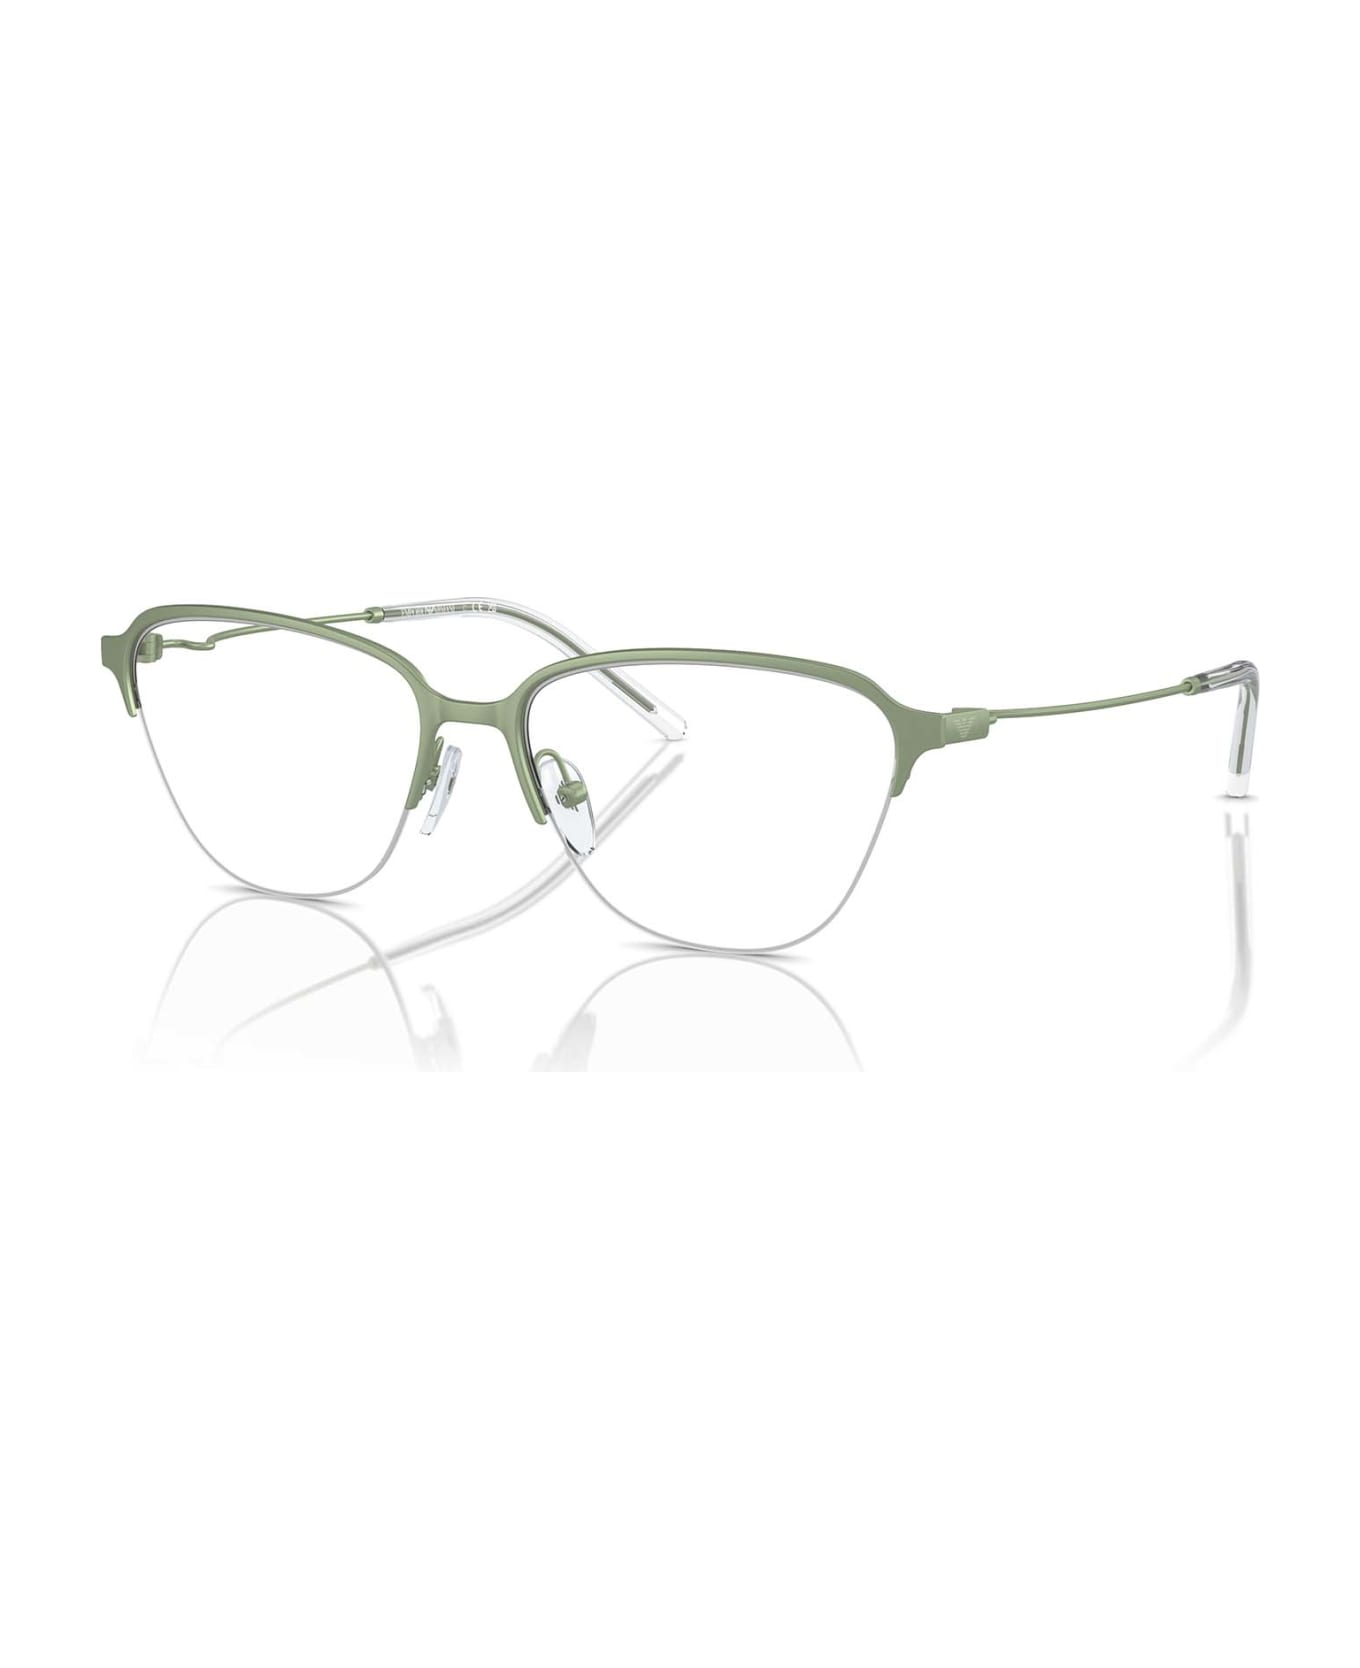 Emporio Armani Ea1161 Metal Green Glasses - Metal Green アイウェア